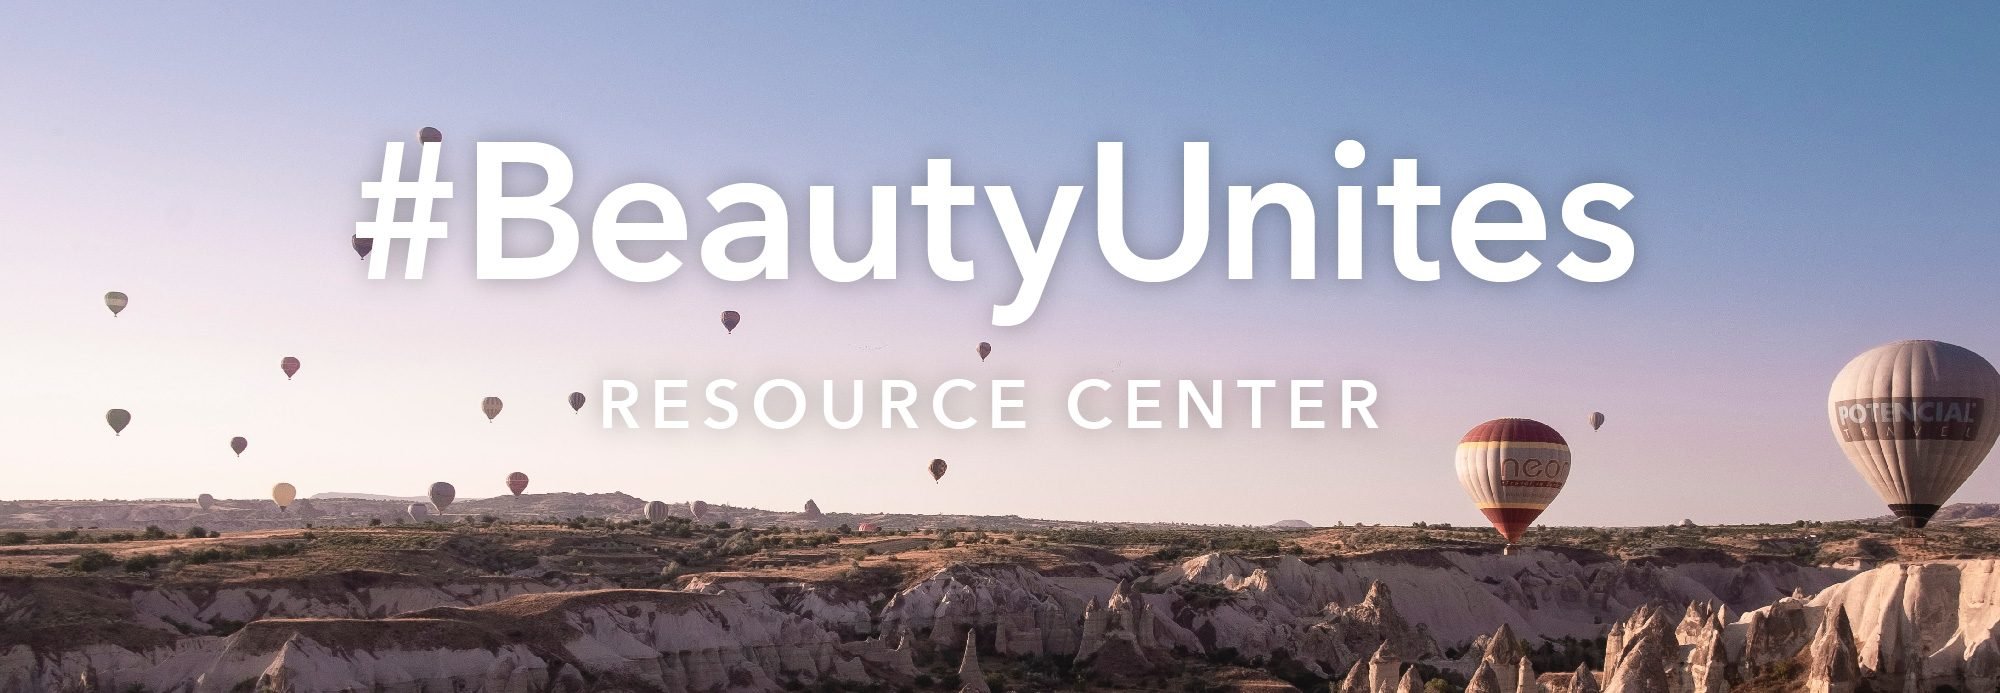 Beauty Unites Resource Center